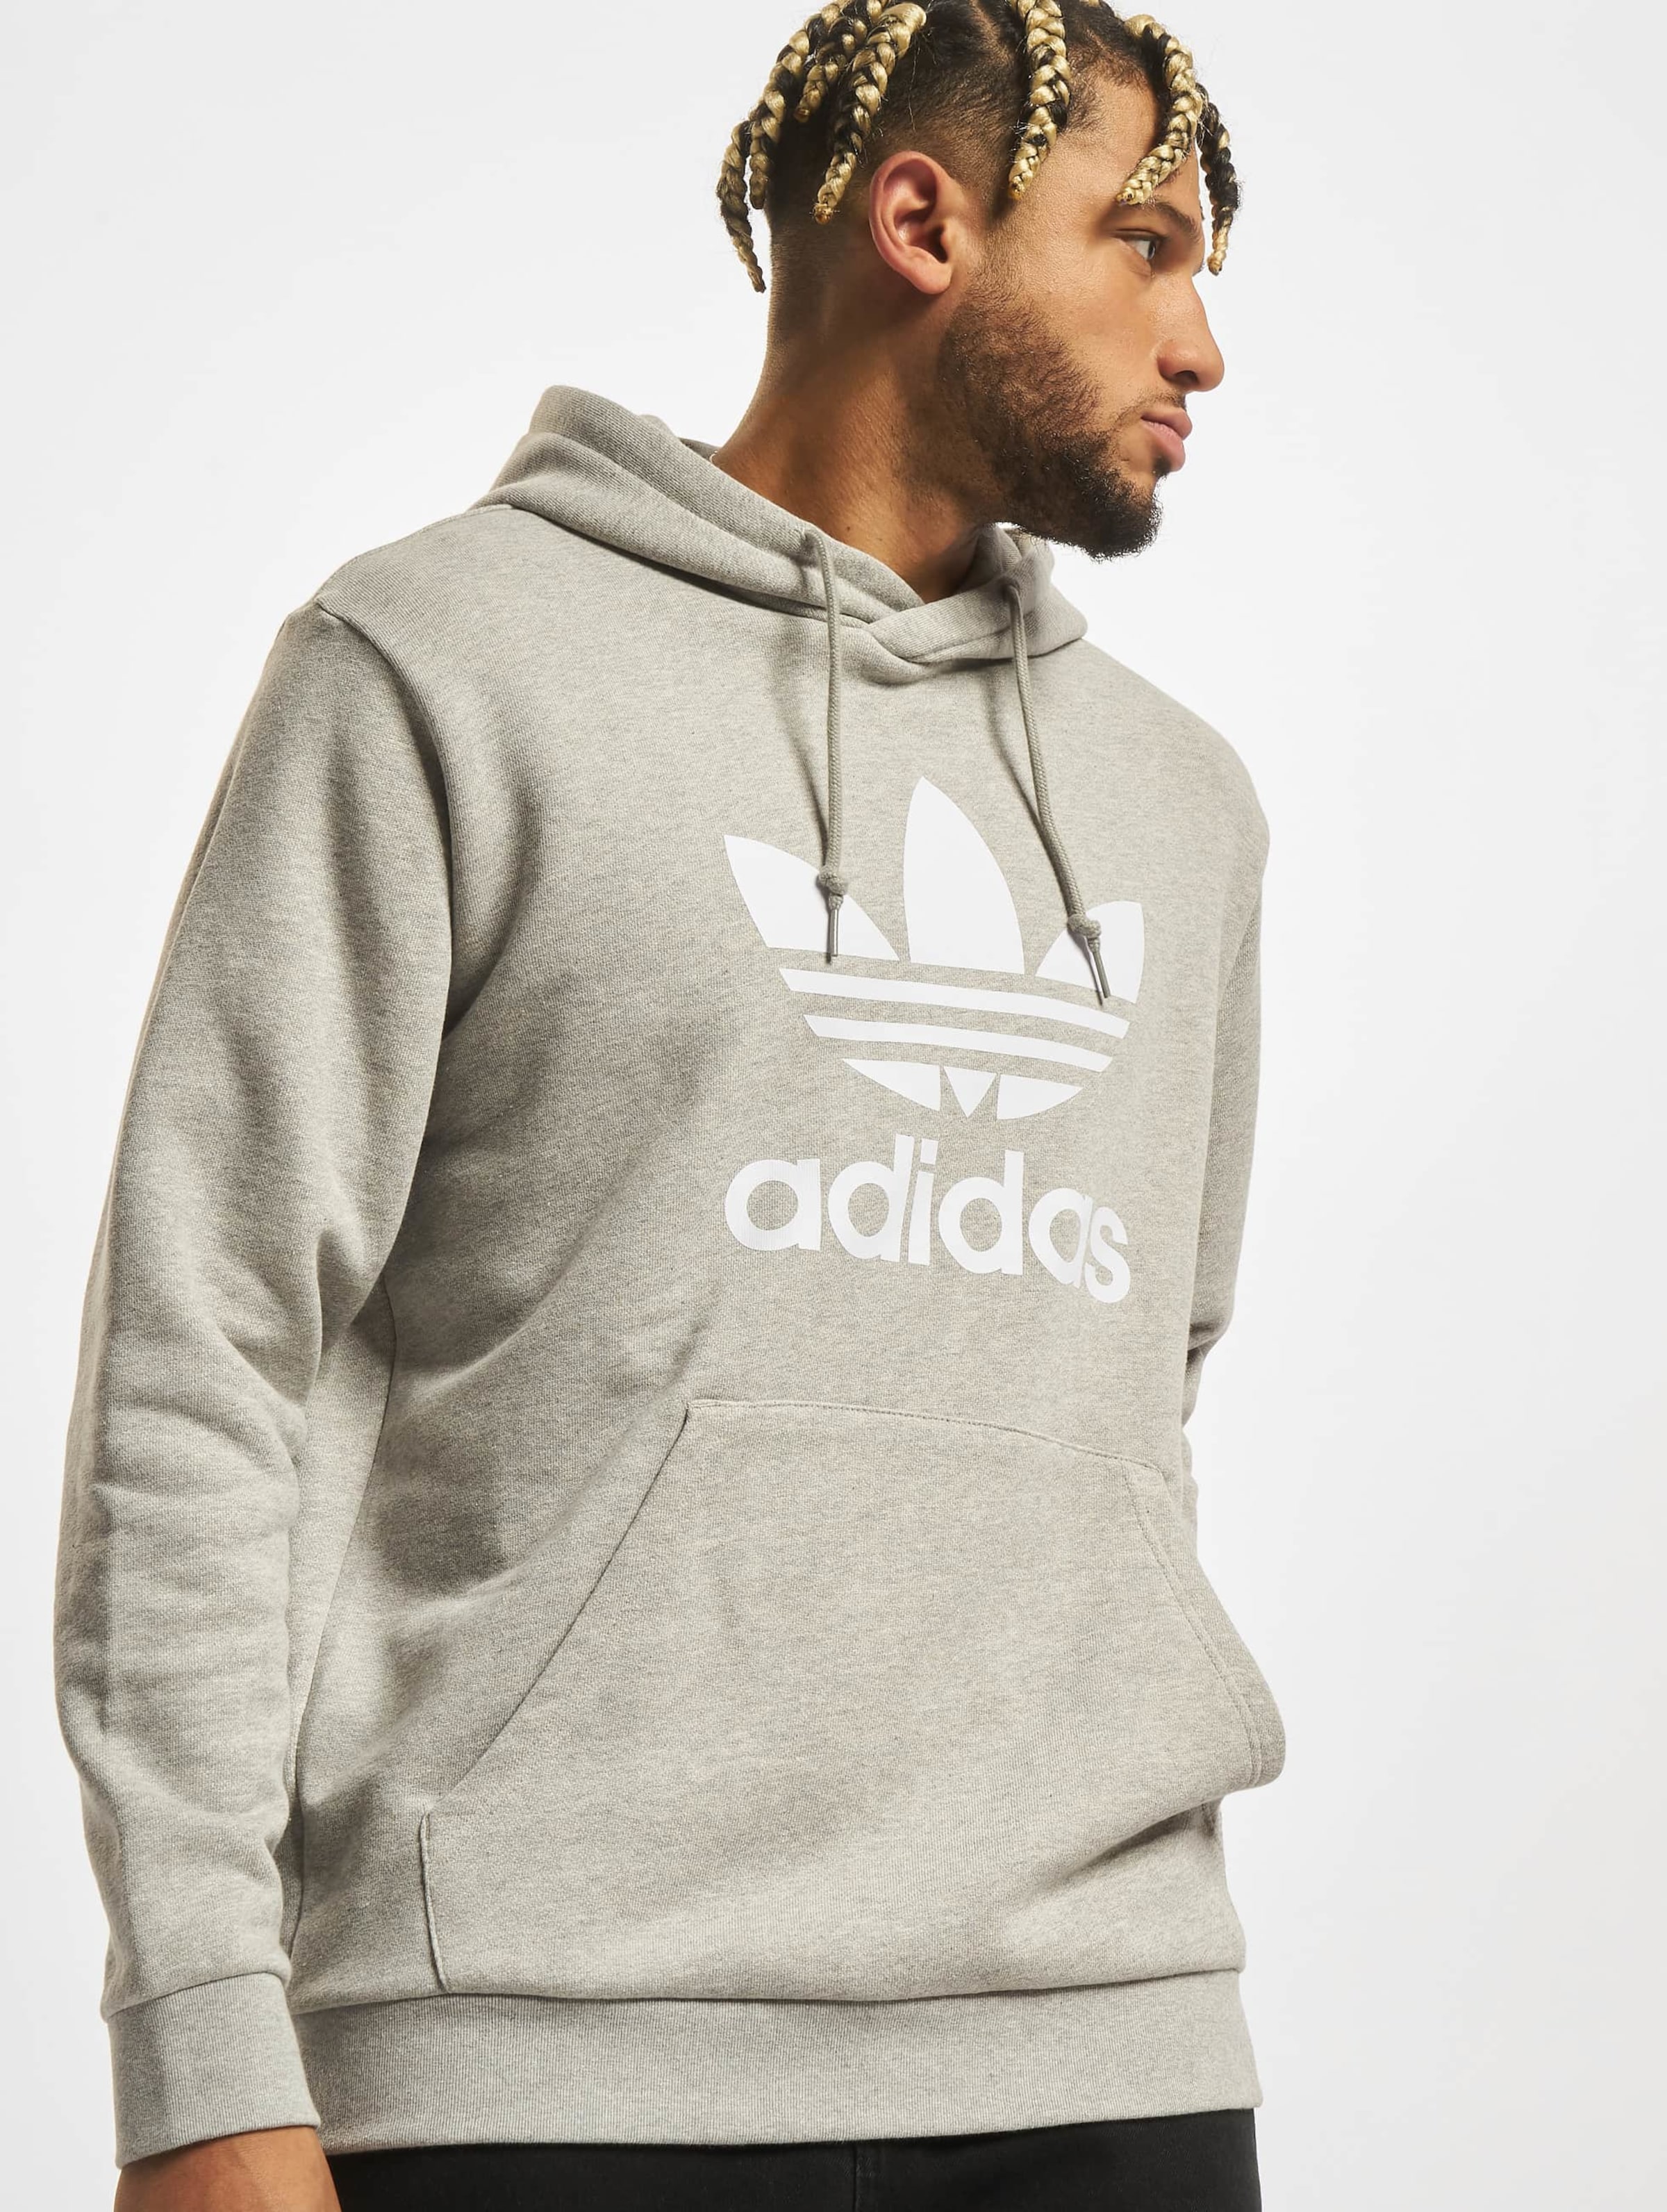 adidas Originals Adidas Trefoil Hoody Mannen op kleur grijs, Maat XL